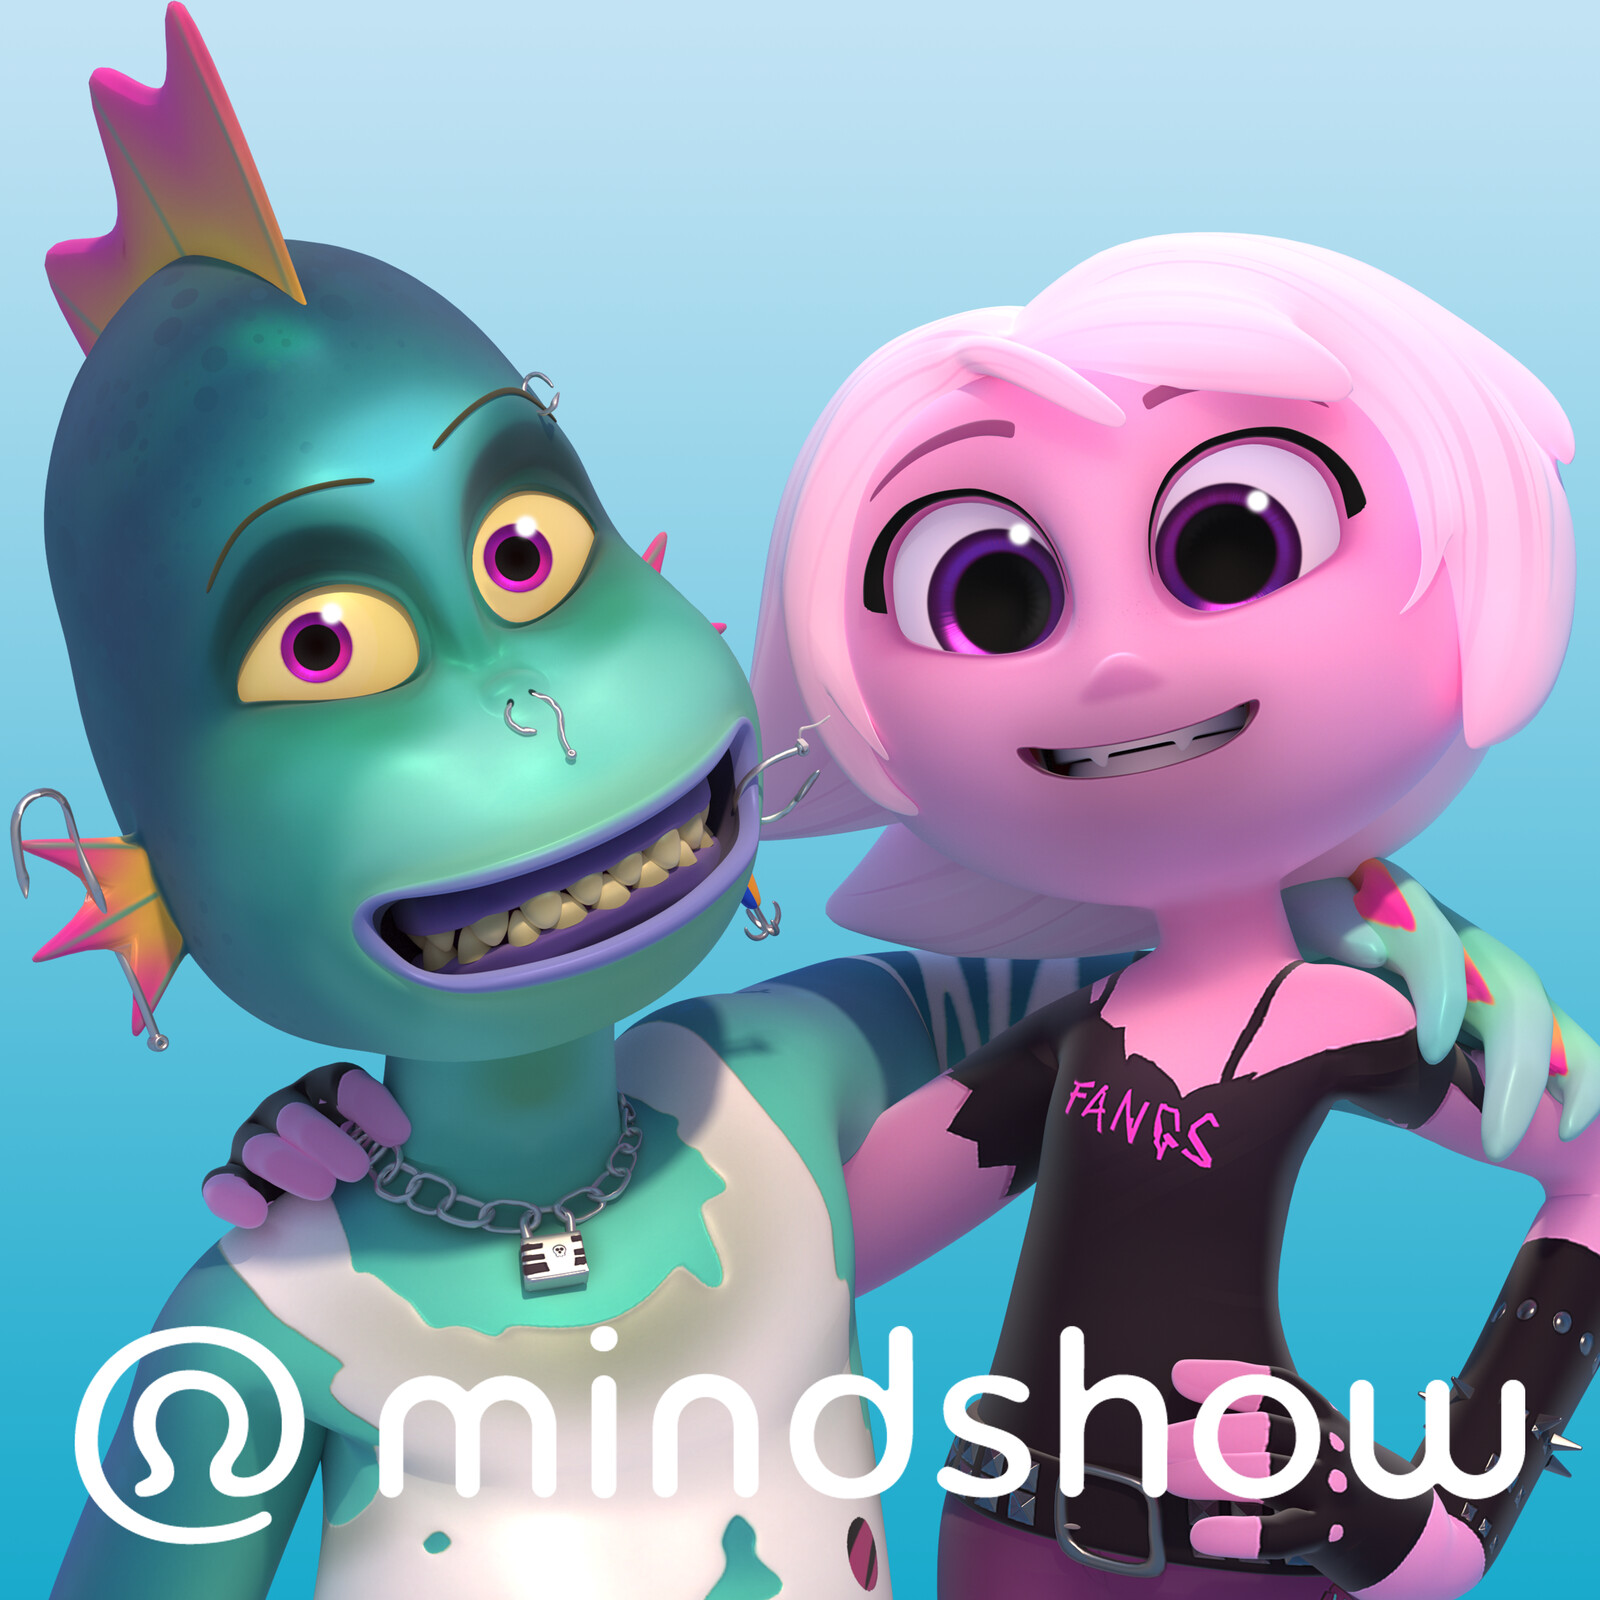 Mindshow VR - Characters